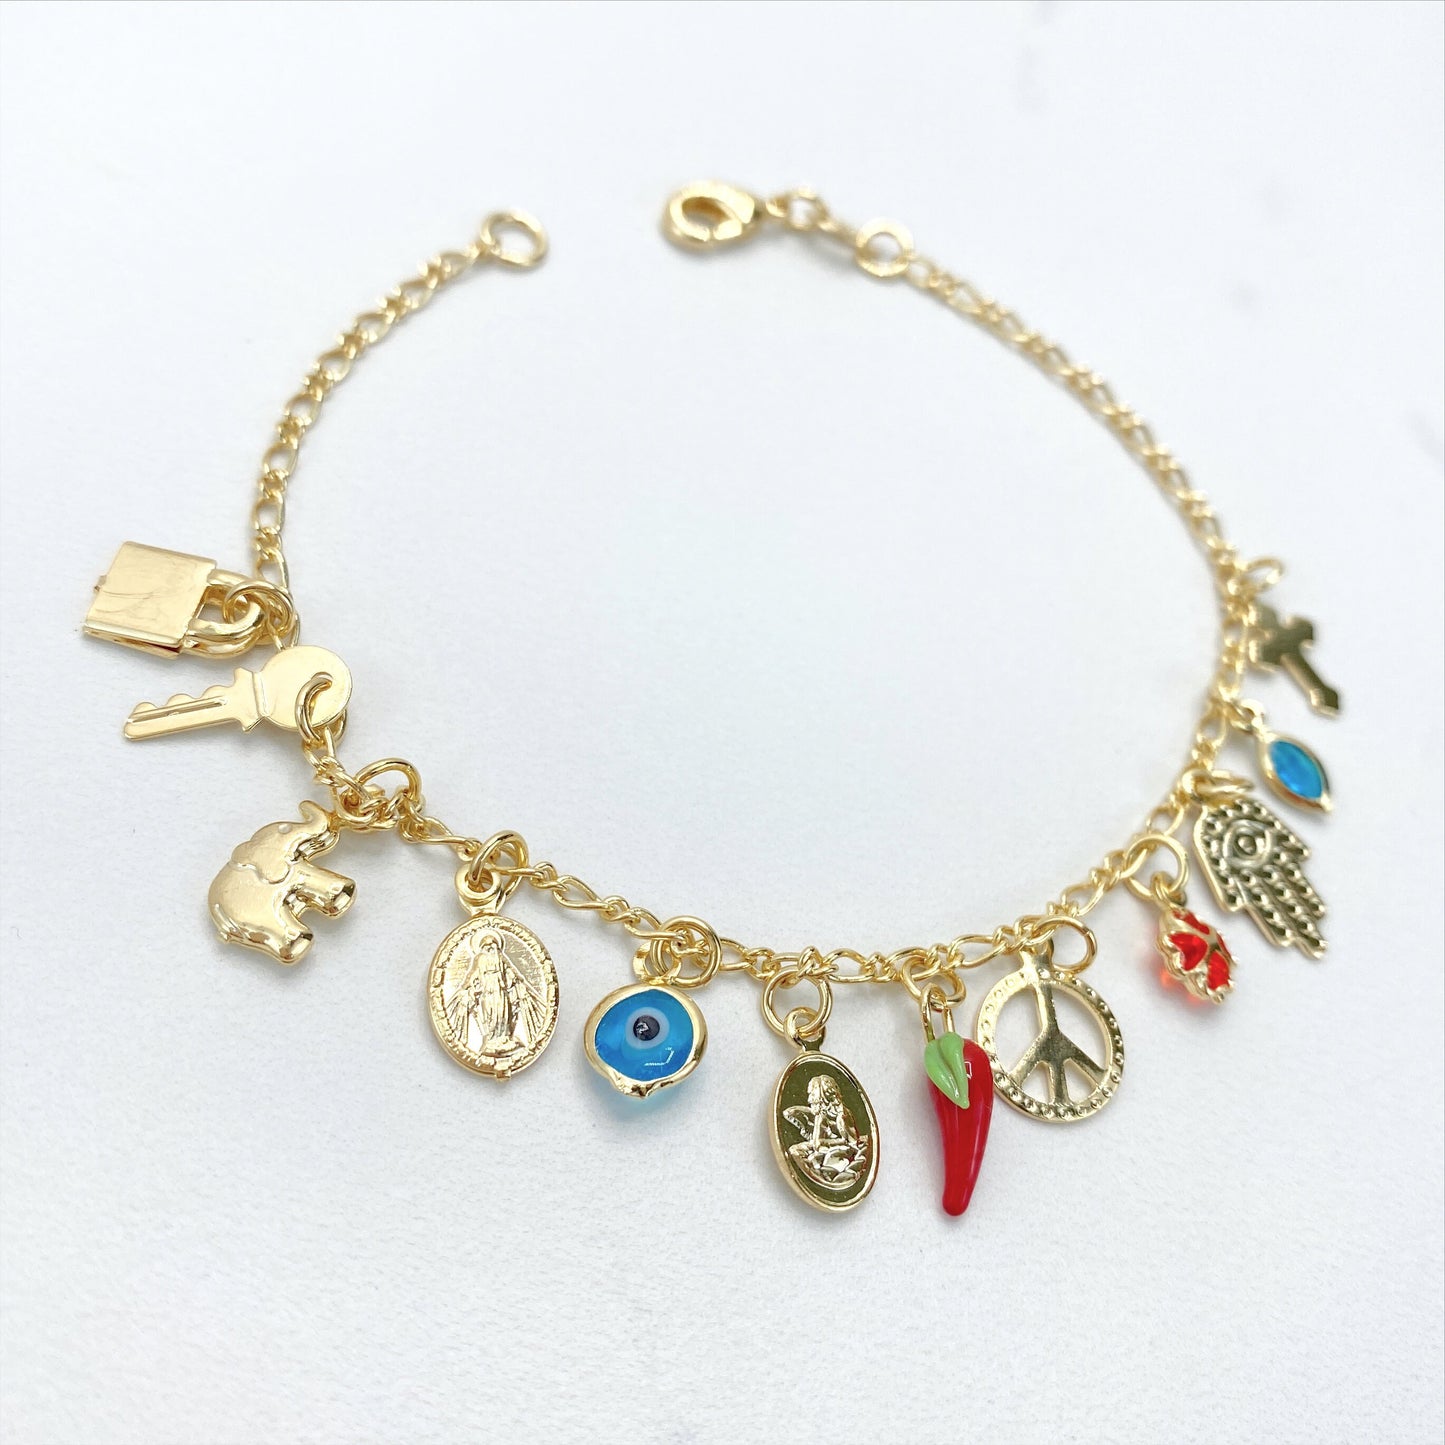 18k Gold Filled Figaro Chain with Cross, Peace, Elephant, Chili, Hamsa Hand, Lock, Key, Saints, Clover Charms Bracelet, Wholesales Jewelry